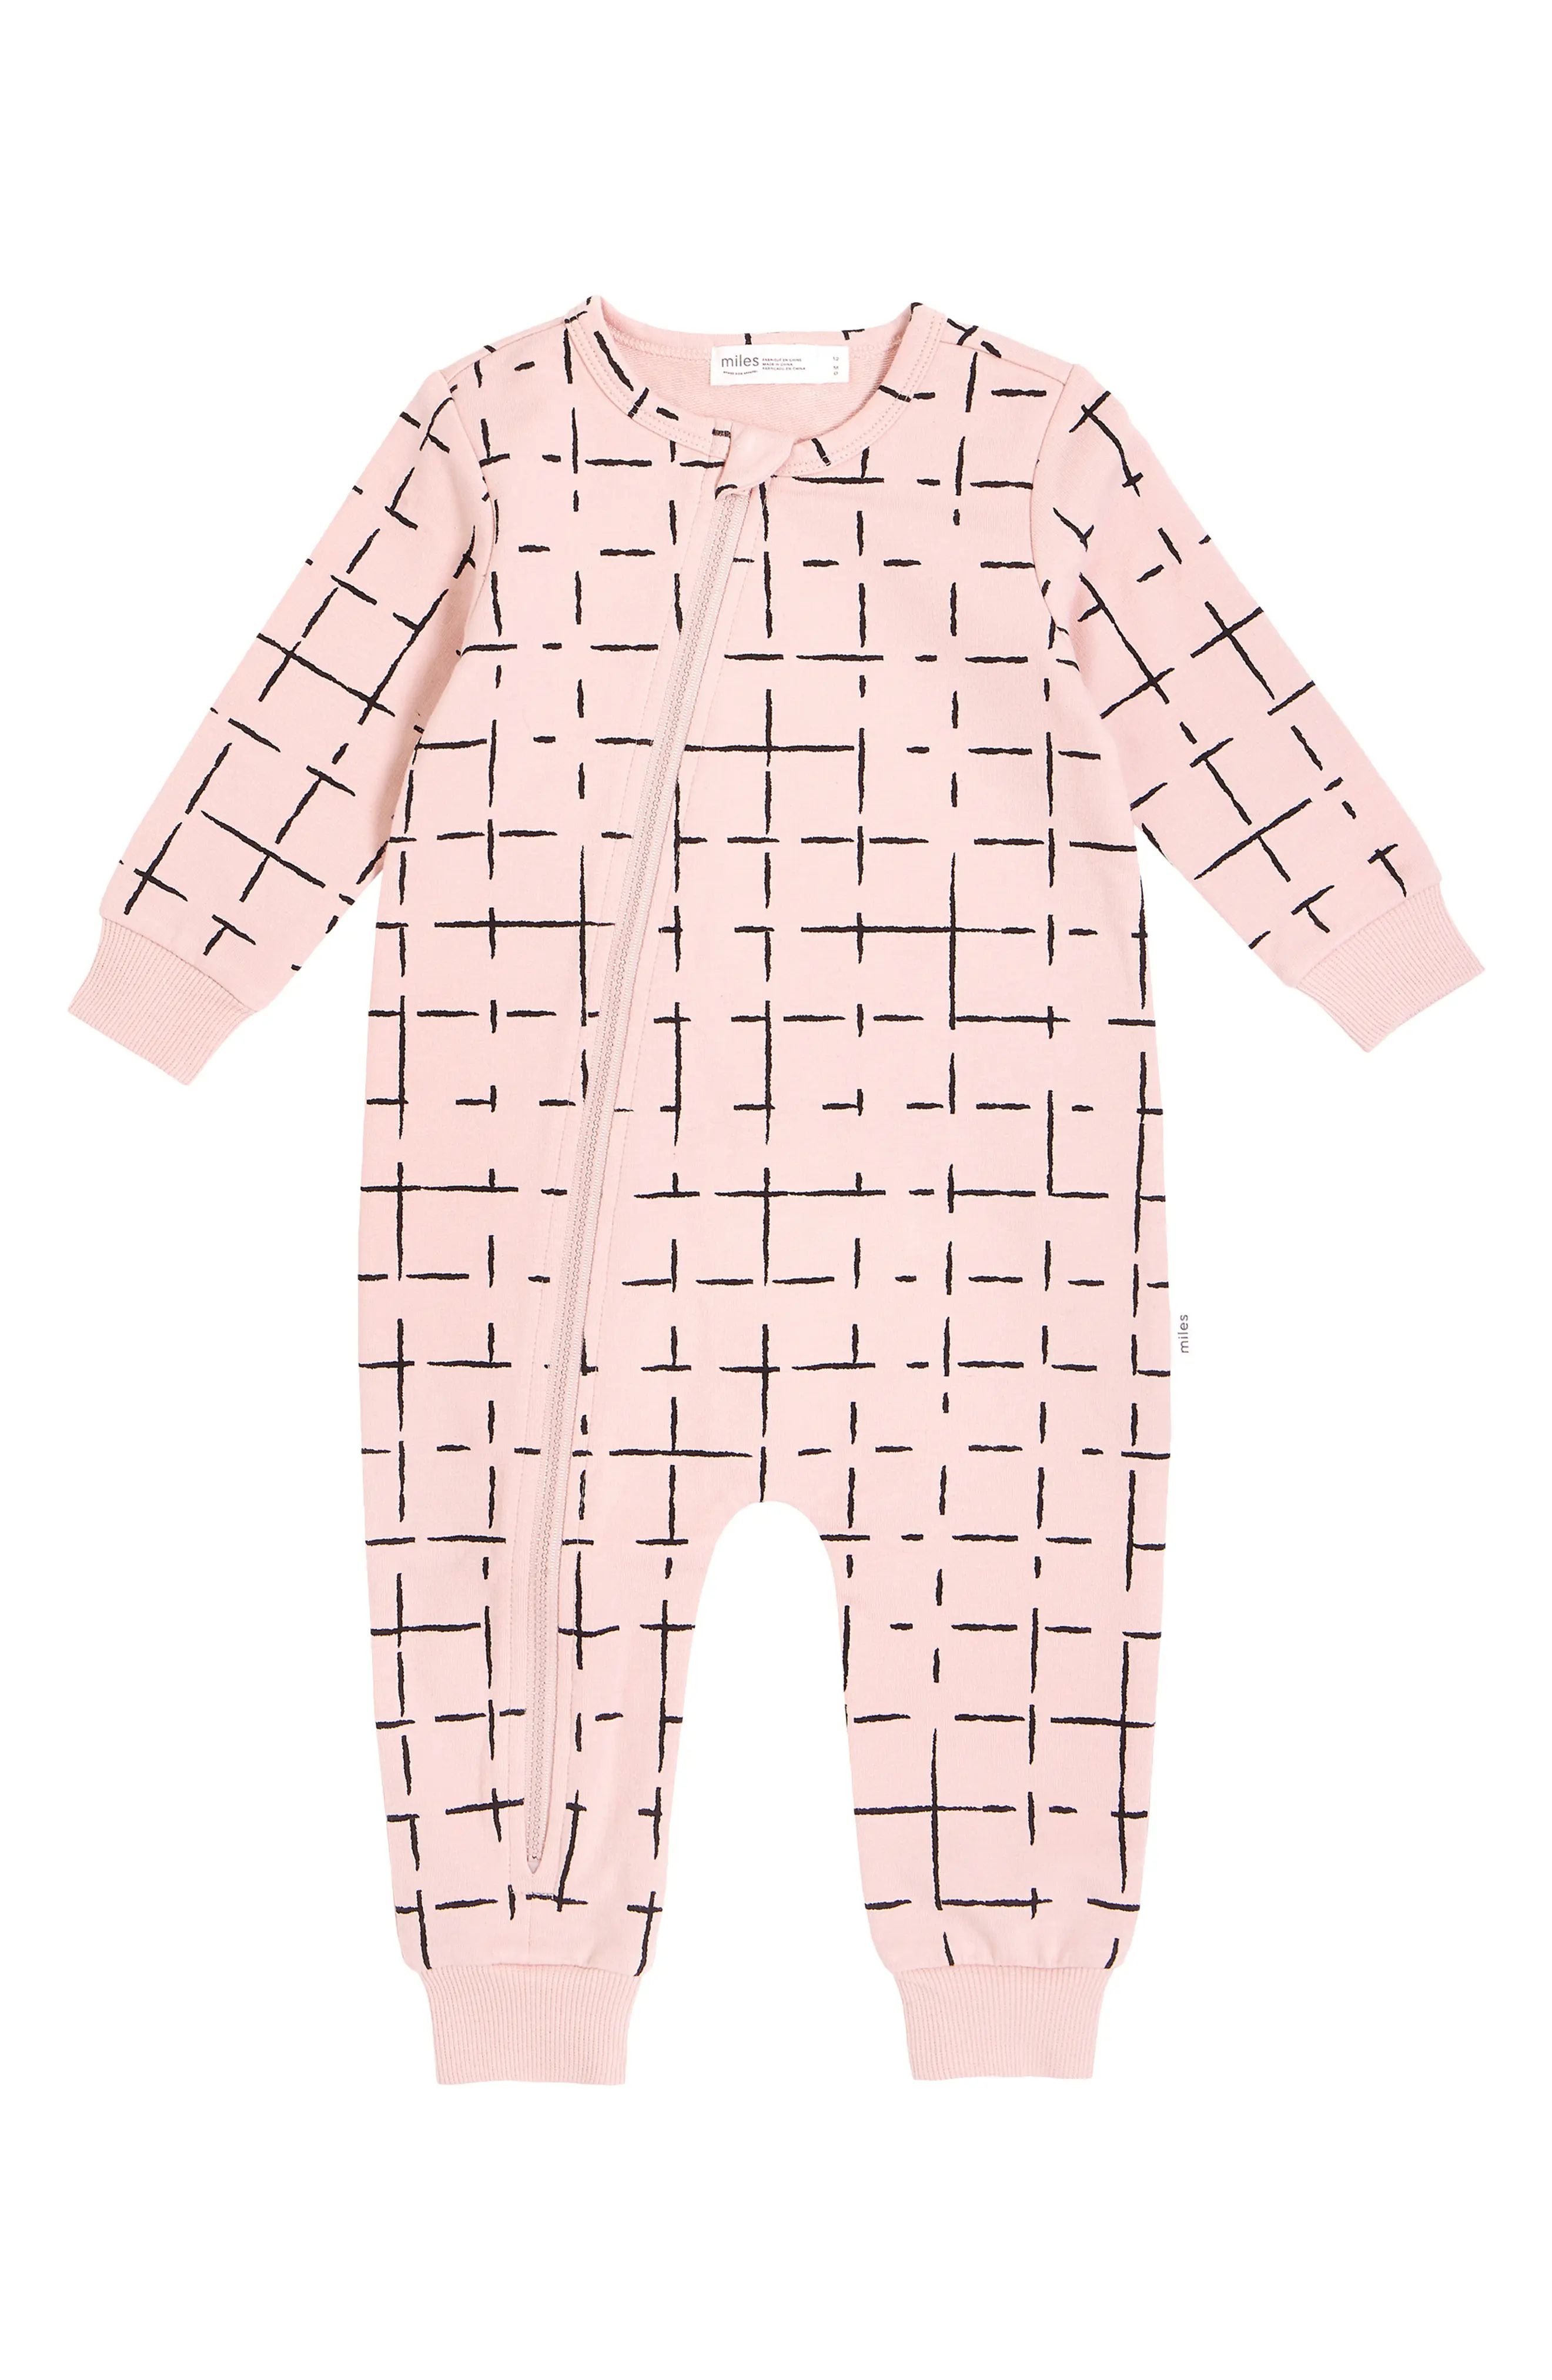 MILES THE LABEL miles Grid Print Knit Romper in Light Pink at Nordstrom, Size 9M | Nordstrom